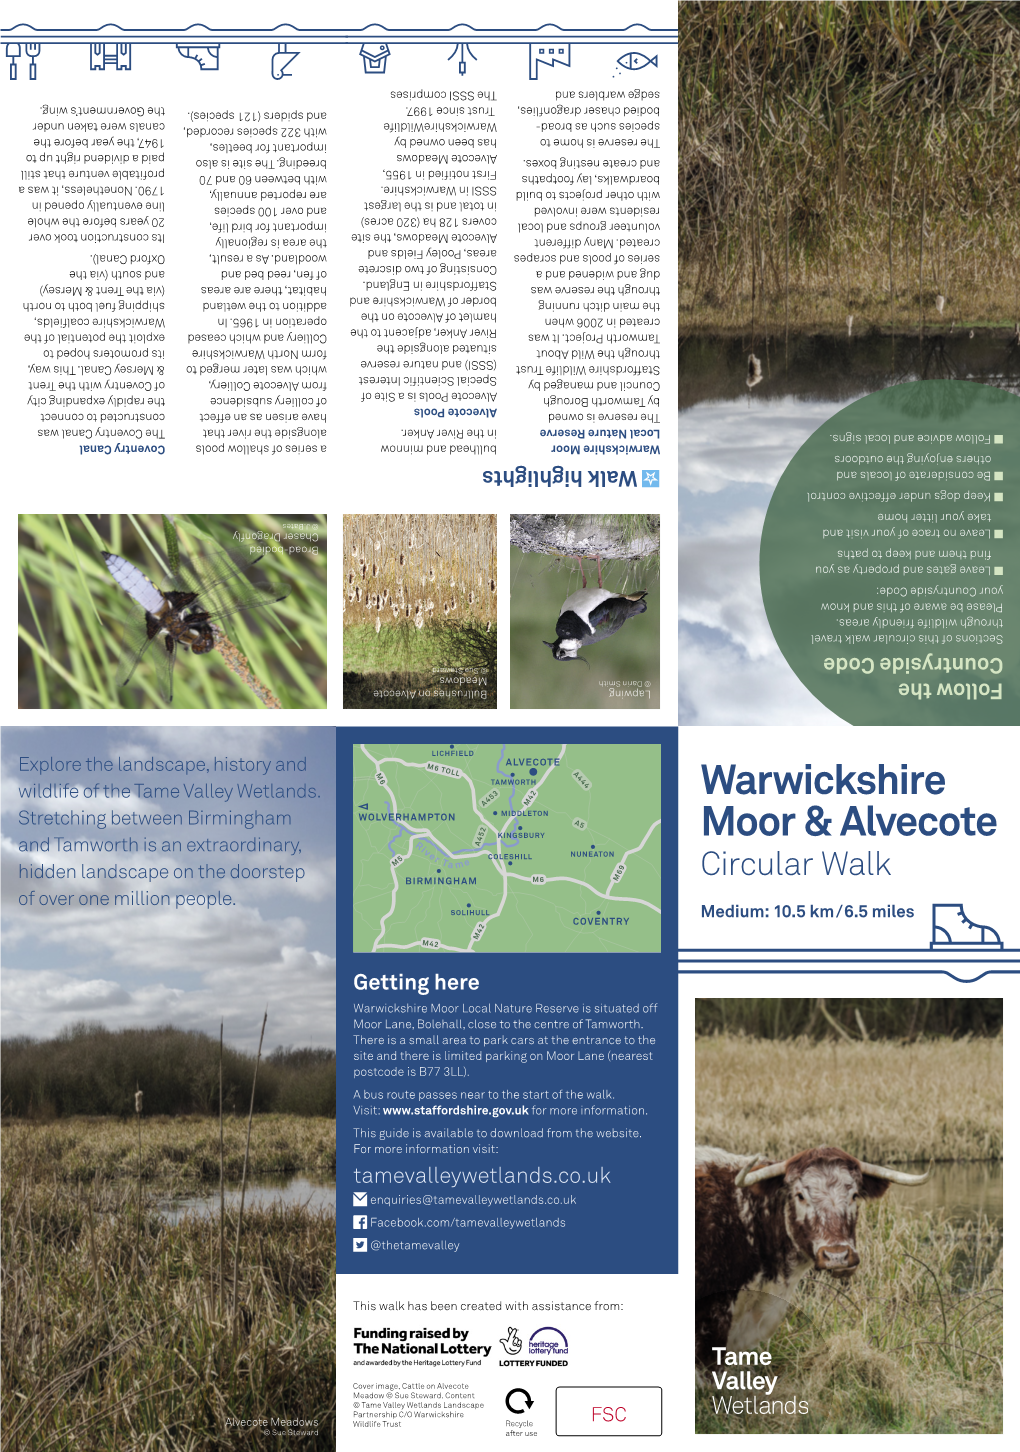 Warwickshire Moor & Alvecote